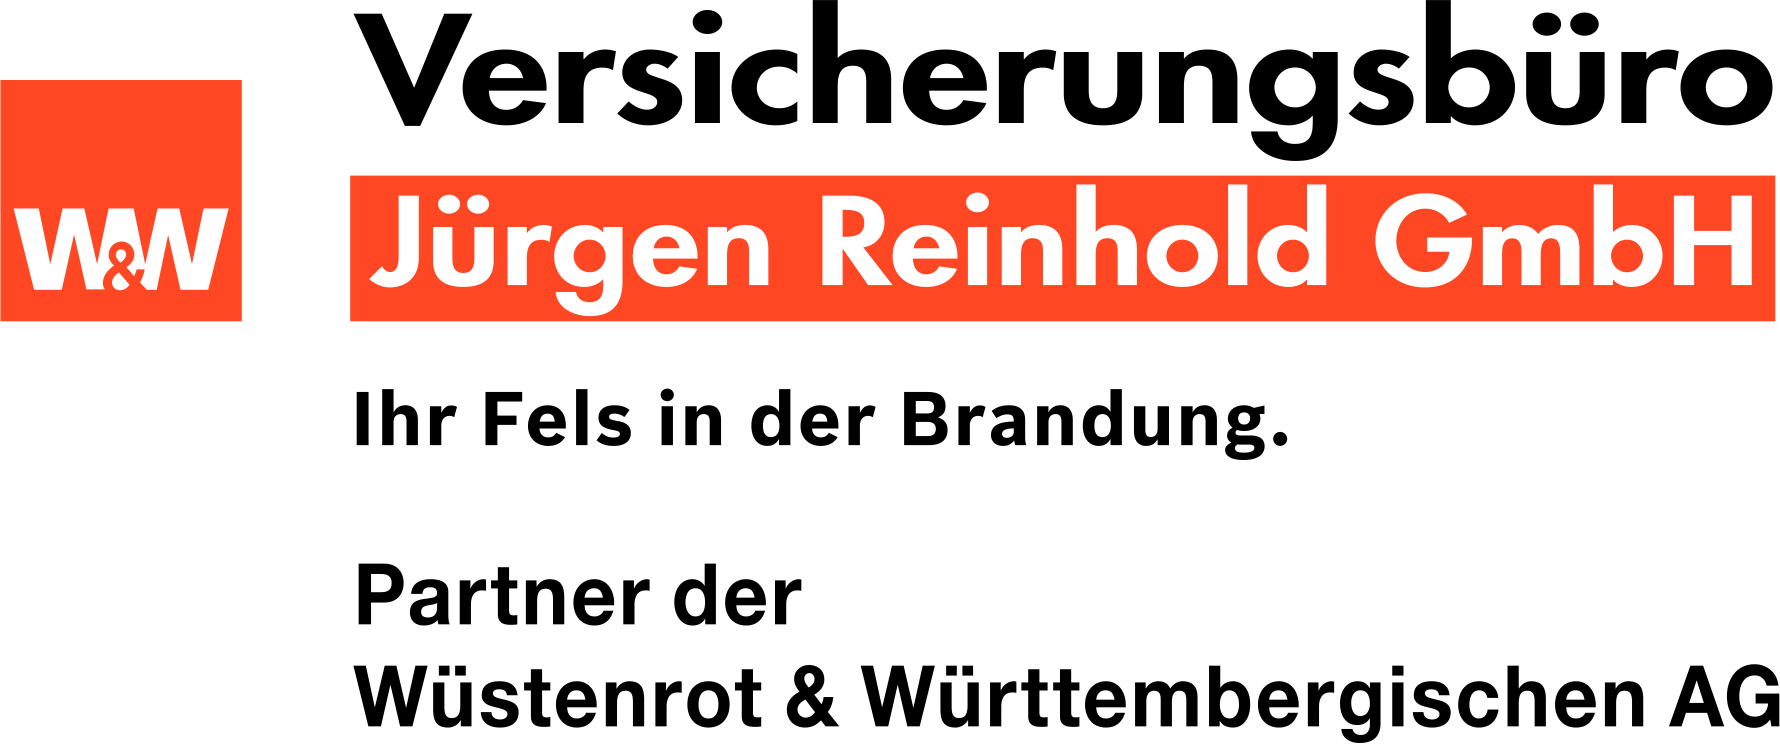 Jürgen Reinhold GmbH